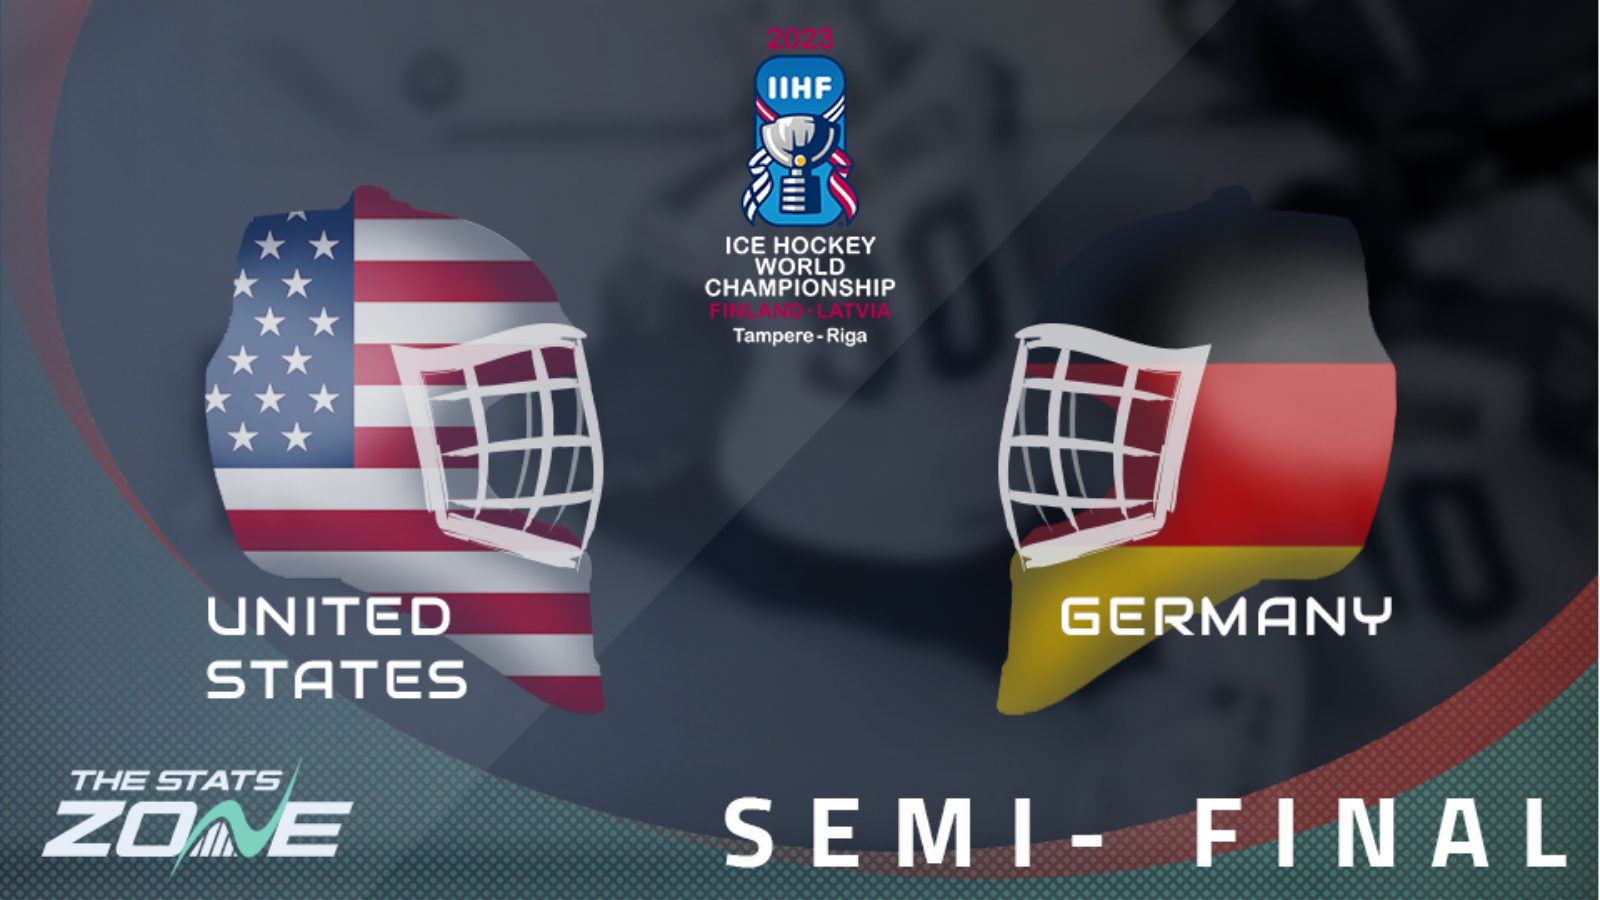 United States vs Germany – Semi-Final